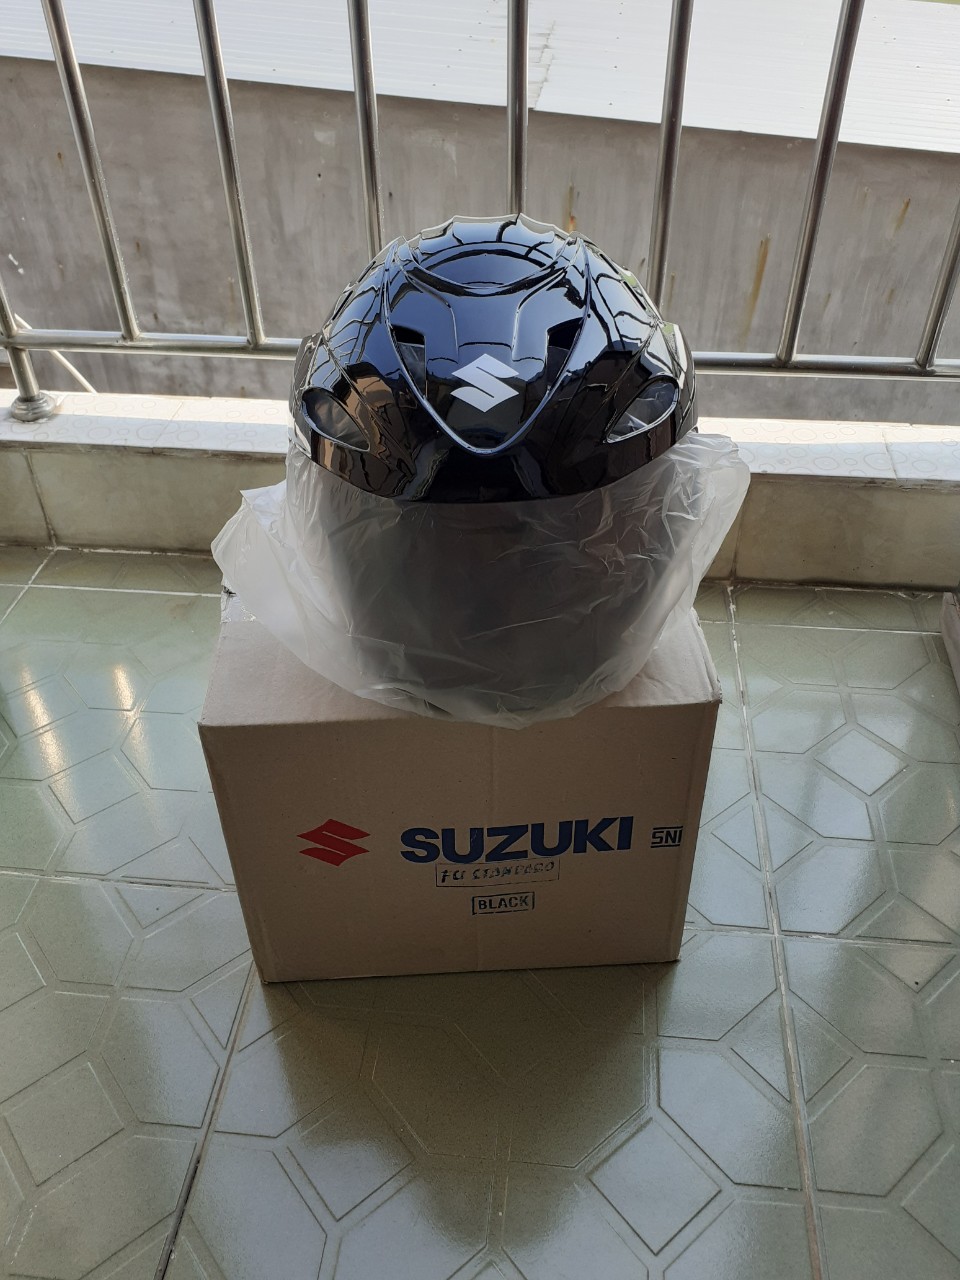 [HCM]mũ bảo hiểm SUZUKI 3/4 Nk theo xe satria từ Indonesia